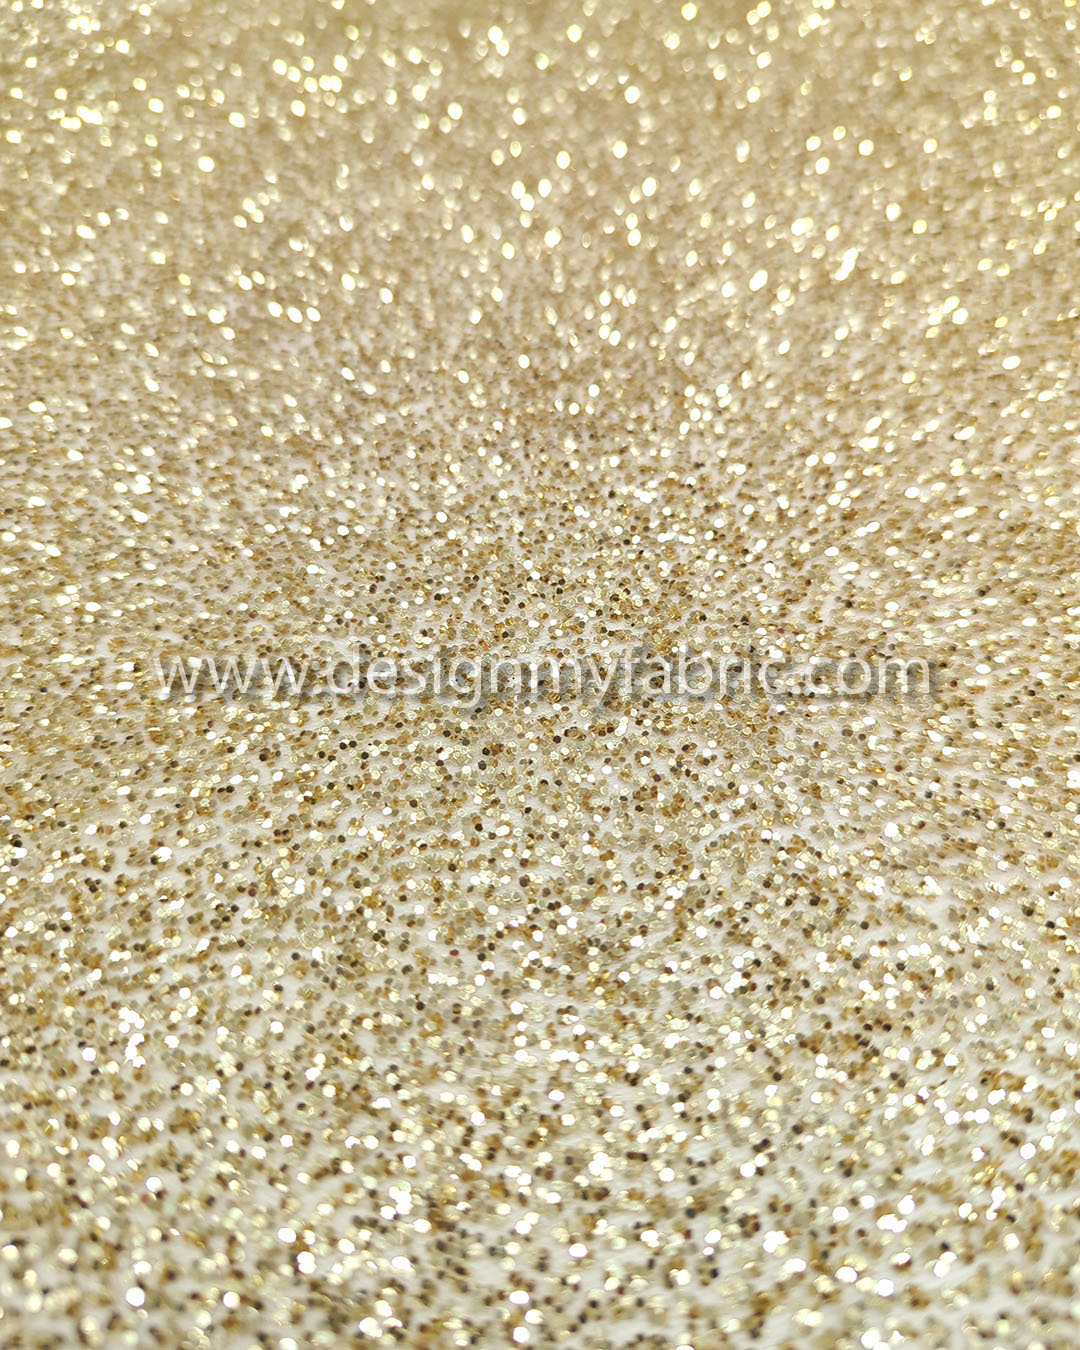 Gold glitter pastel net fabric #91578 - Design My Fabric